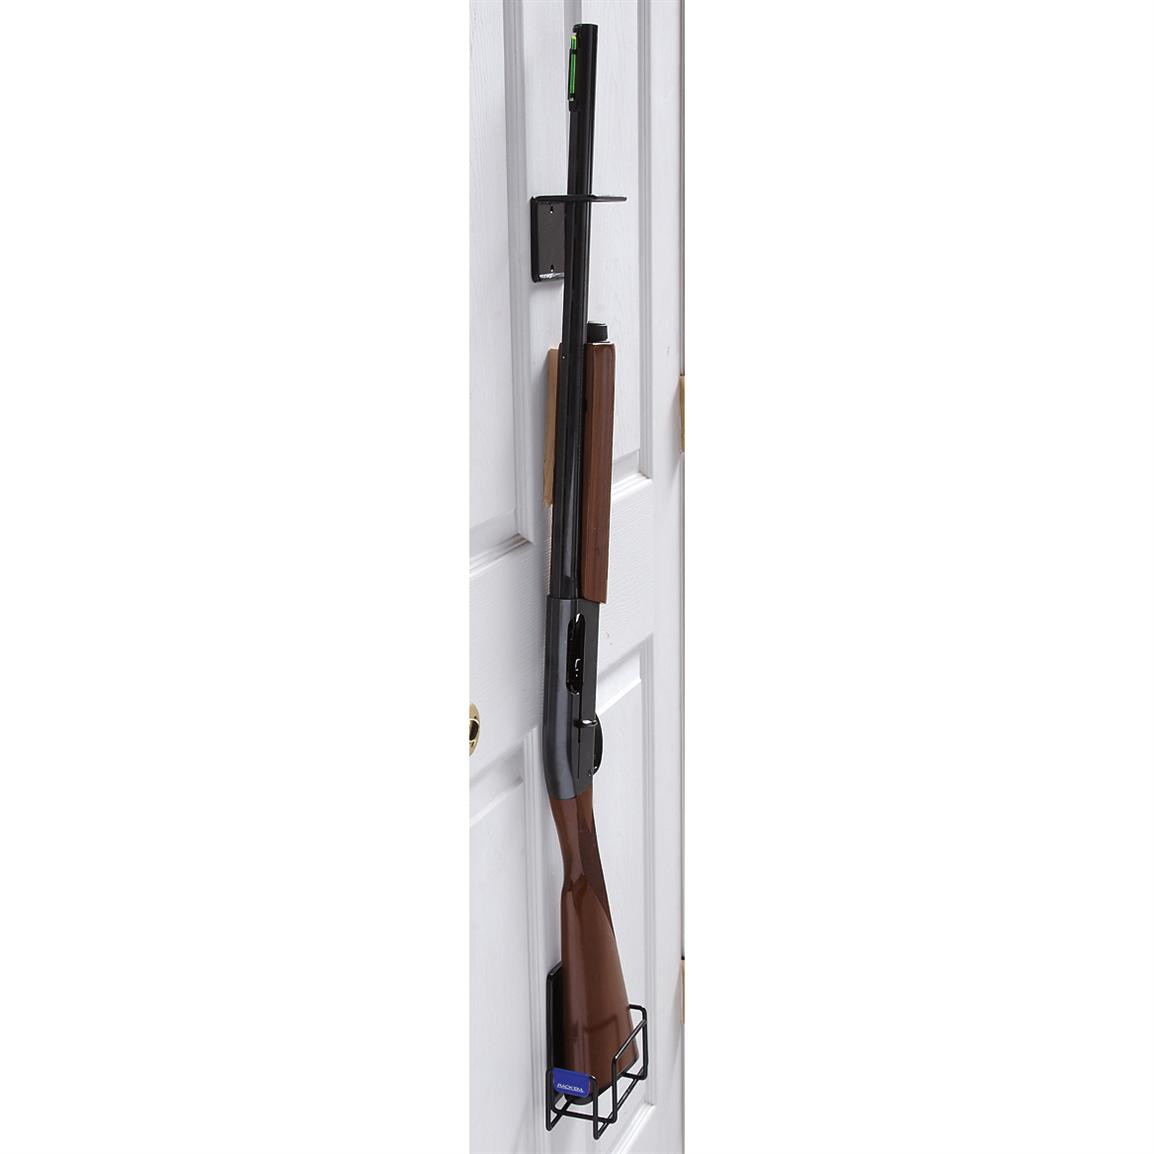 Best ideas about Vertical Wall Mount Gun Rack
. Save or Pin 2 Pc Long Gun Wall Mount Black Gun Cabinets Now.